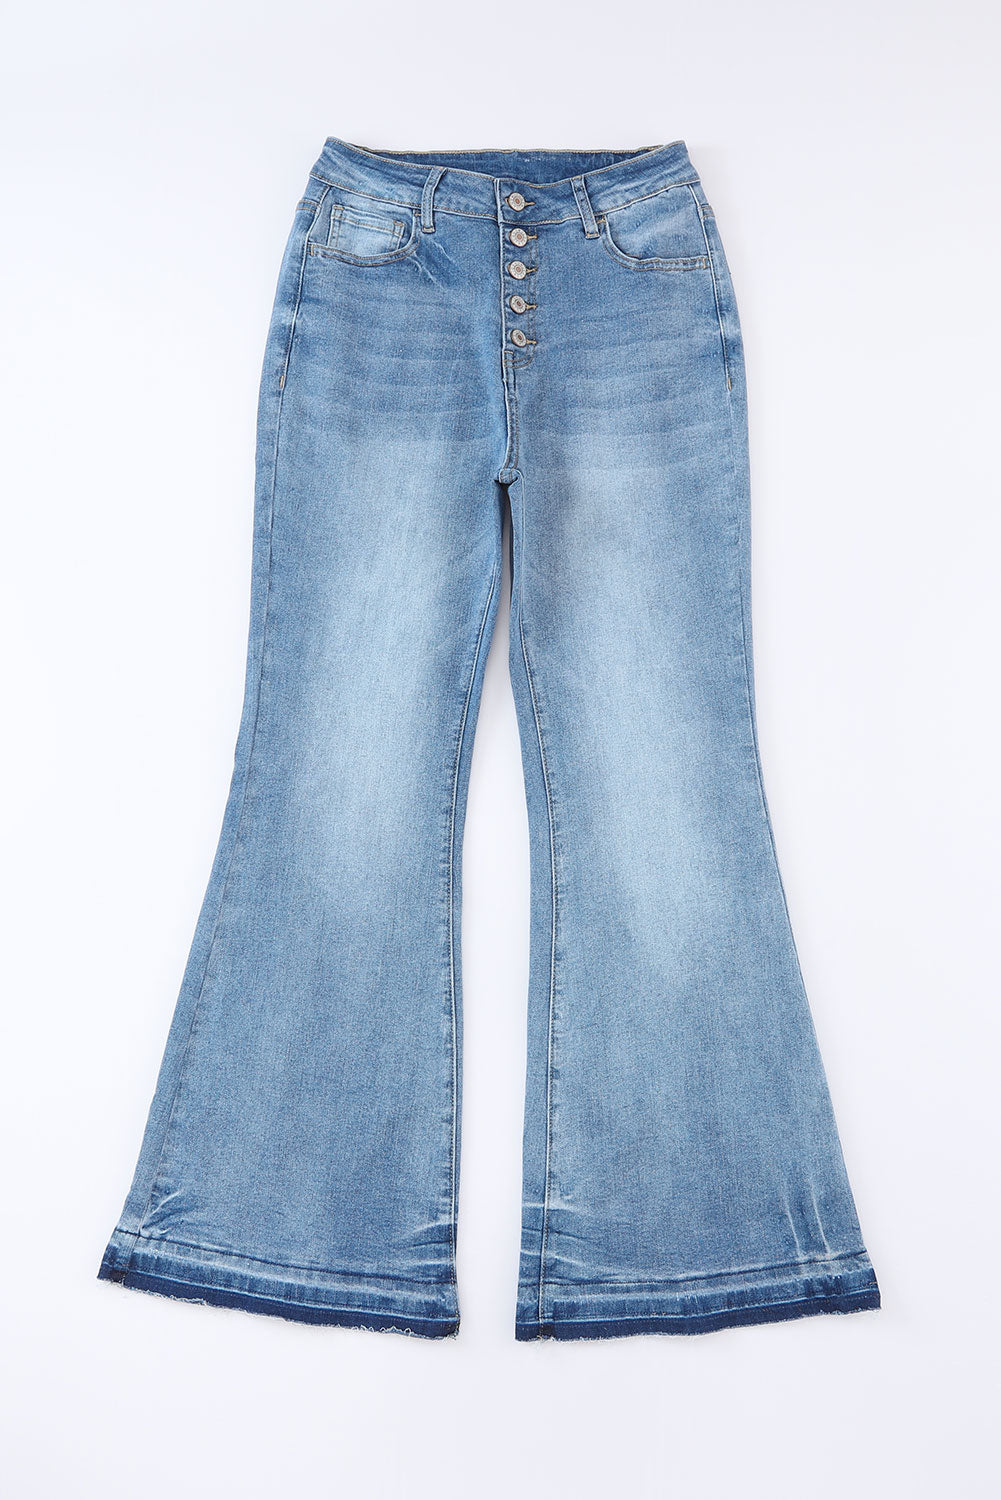 Sky Blue High Waist Buttoned Distressed Flared Womens Jeans - US2EInc Apparel Plug Ltd. Co